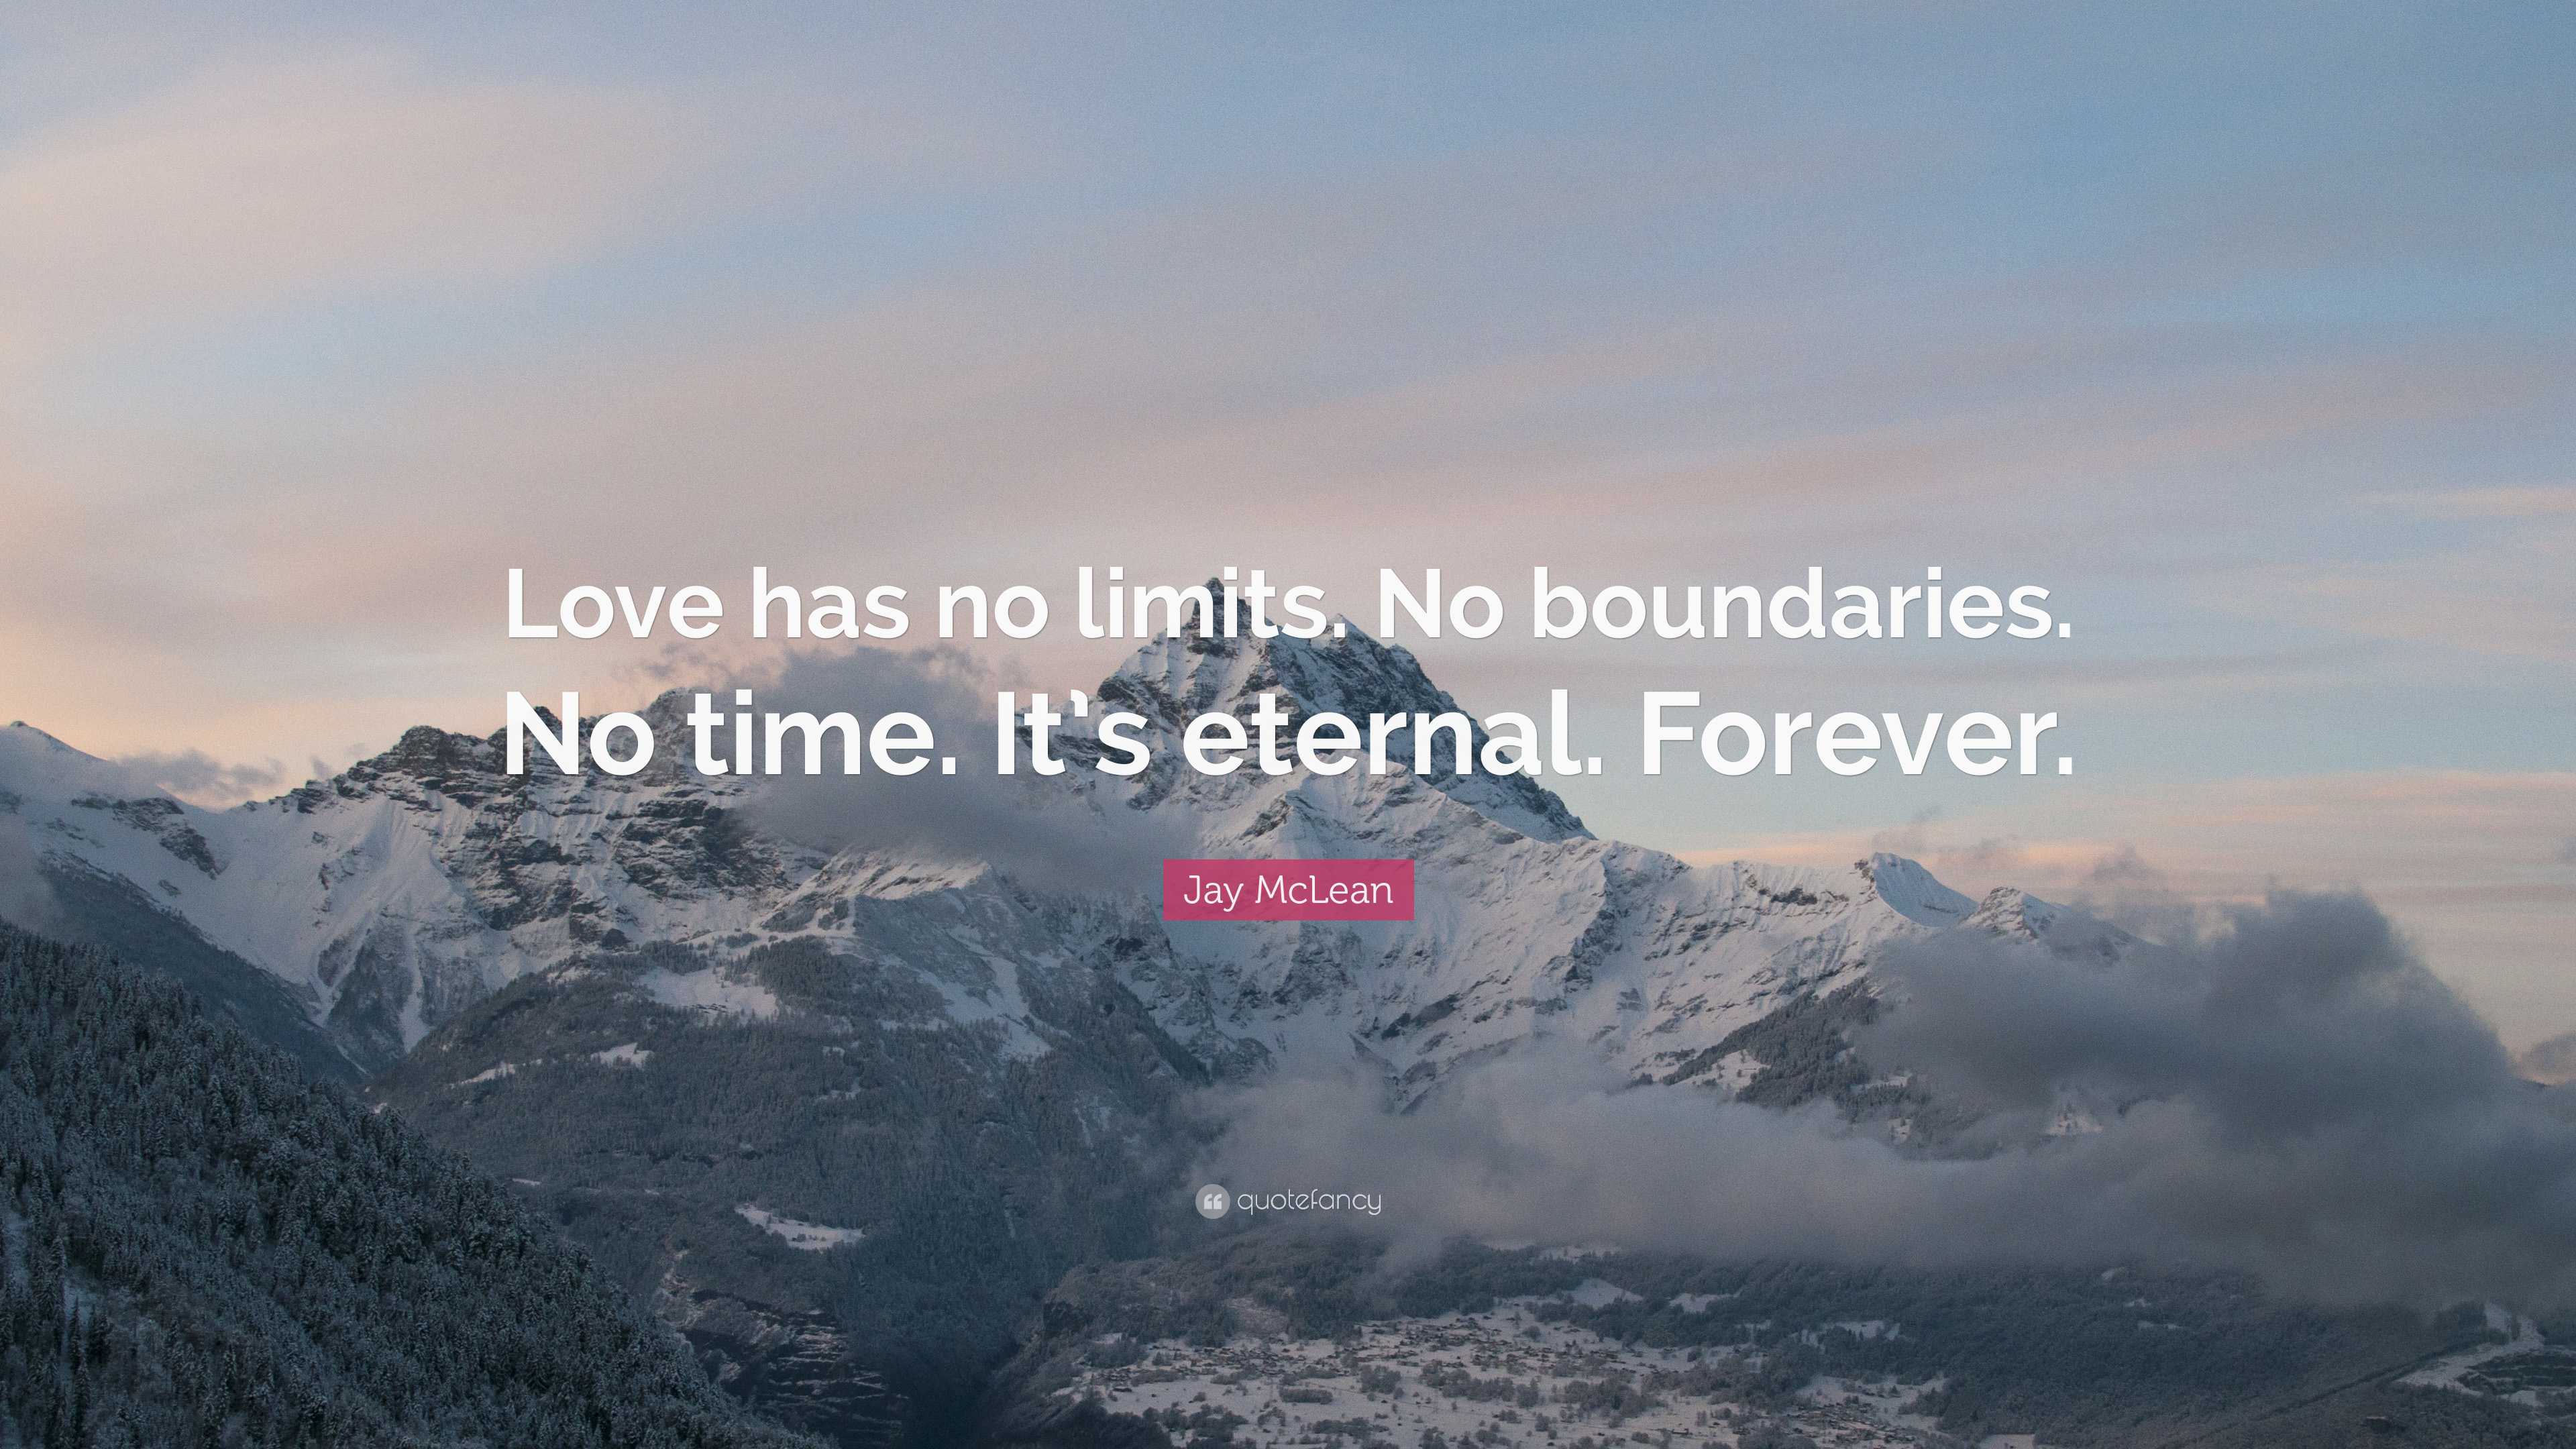 Jay McLean Quote: “Love has no limits. No boundaries. No time